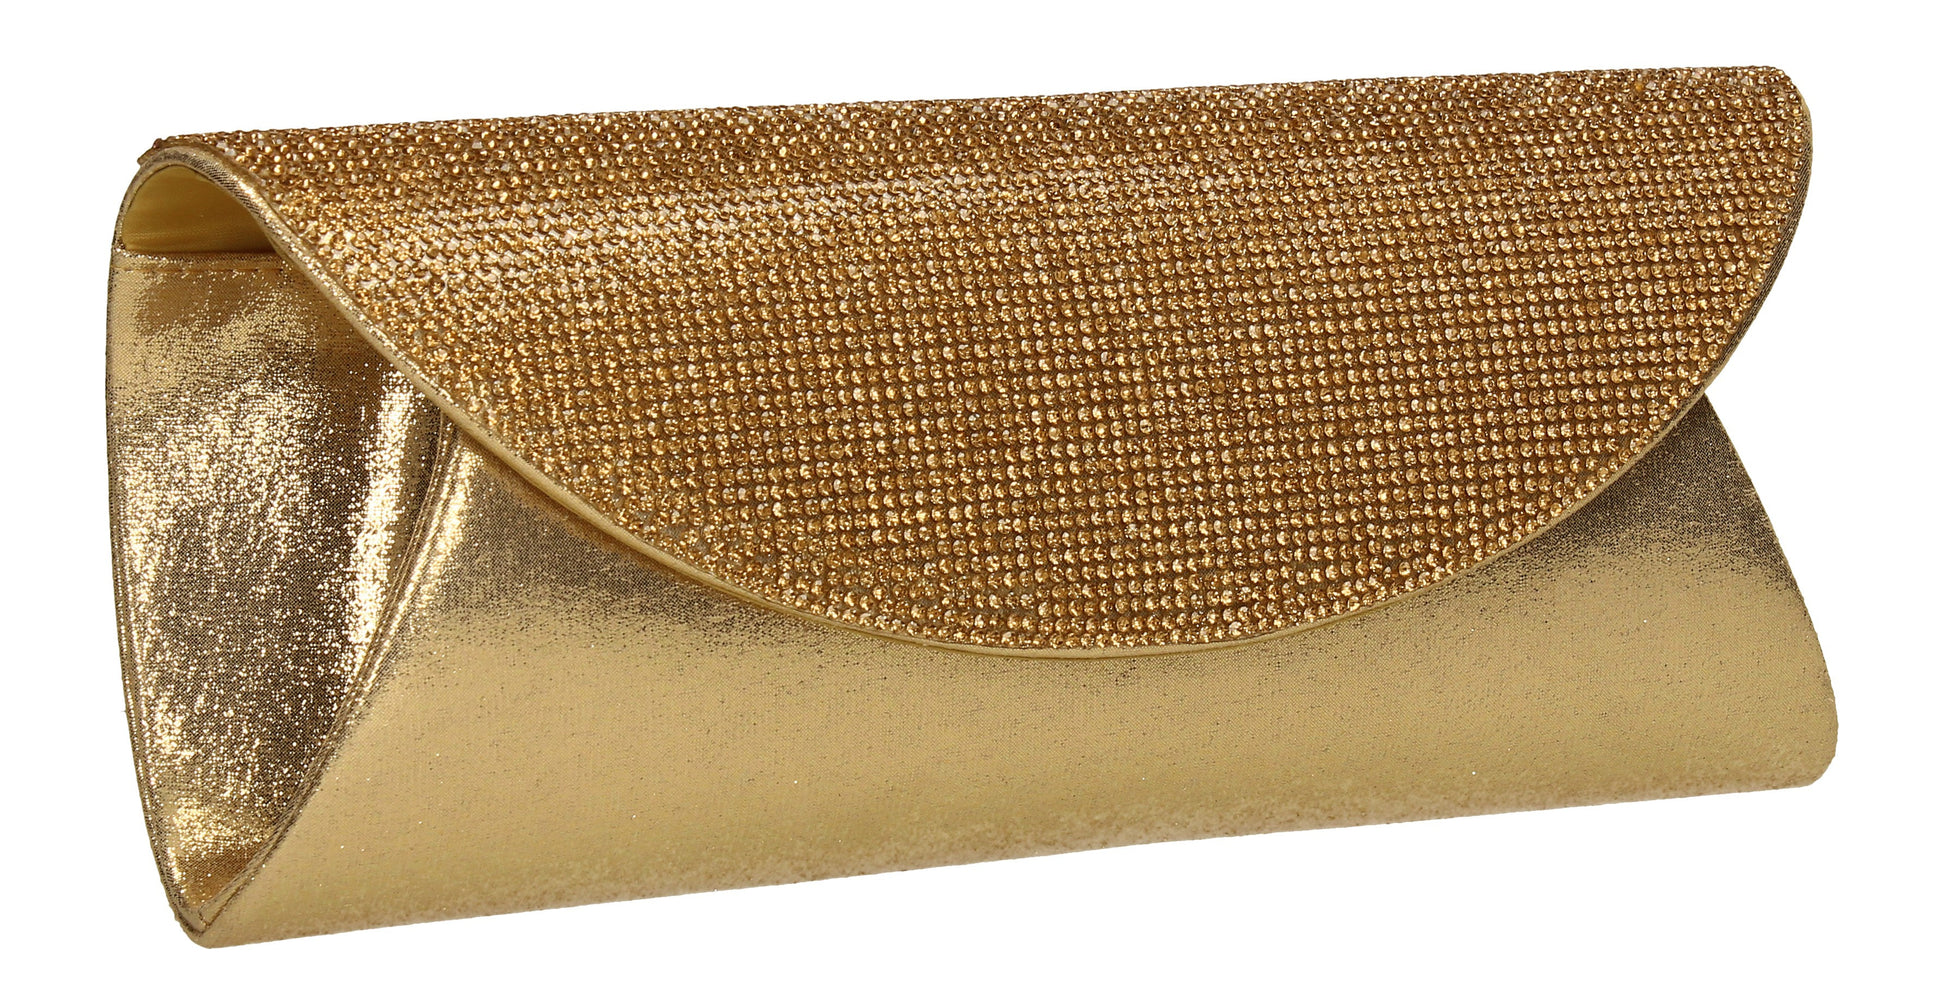 SWANKYSWANS Merylin Clutch Bag Gold Cute Cheap Clutch Bag For Weddings School and Work